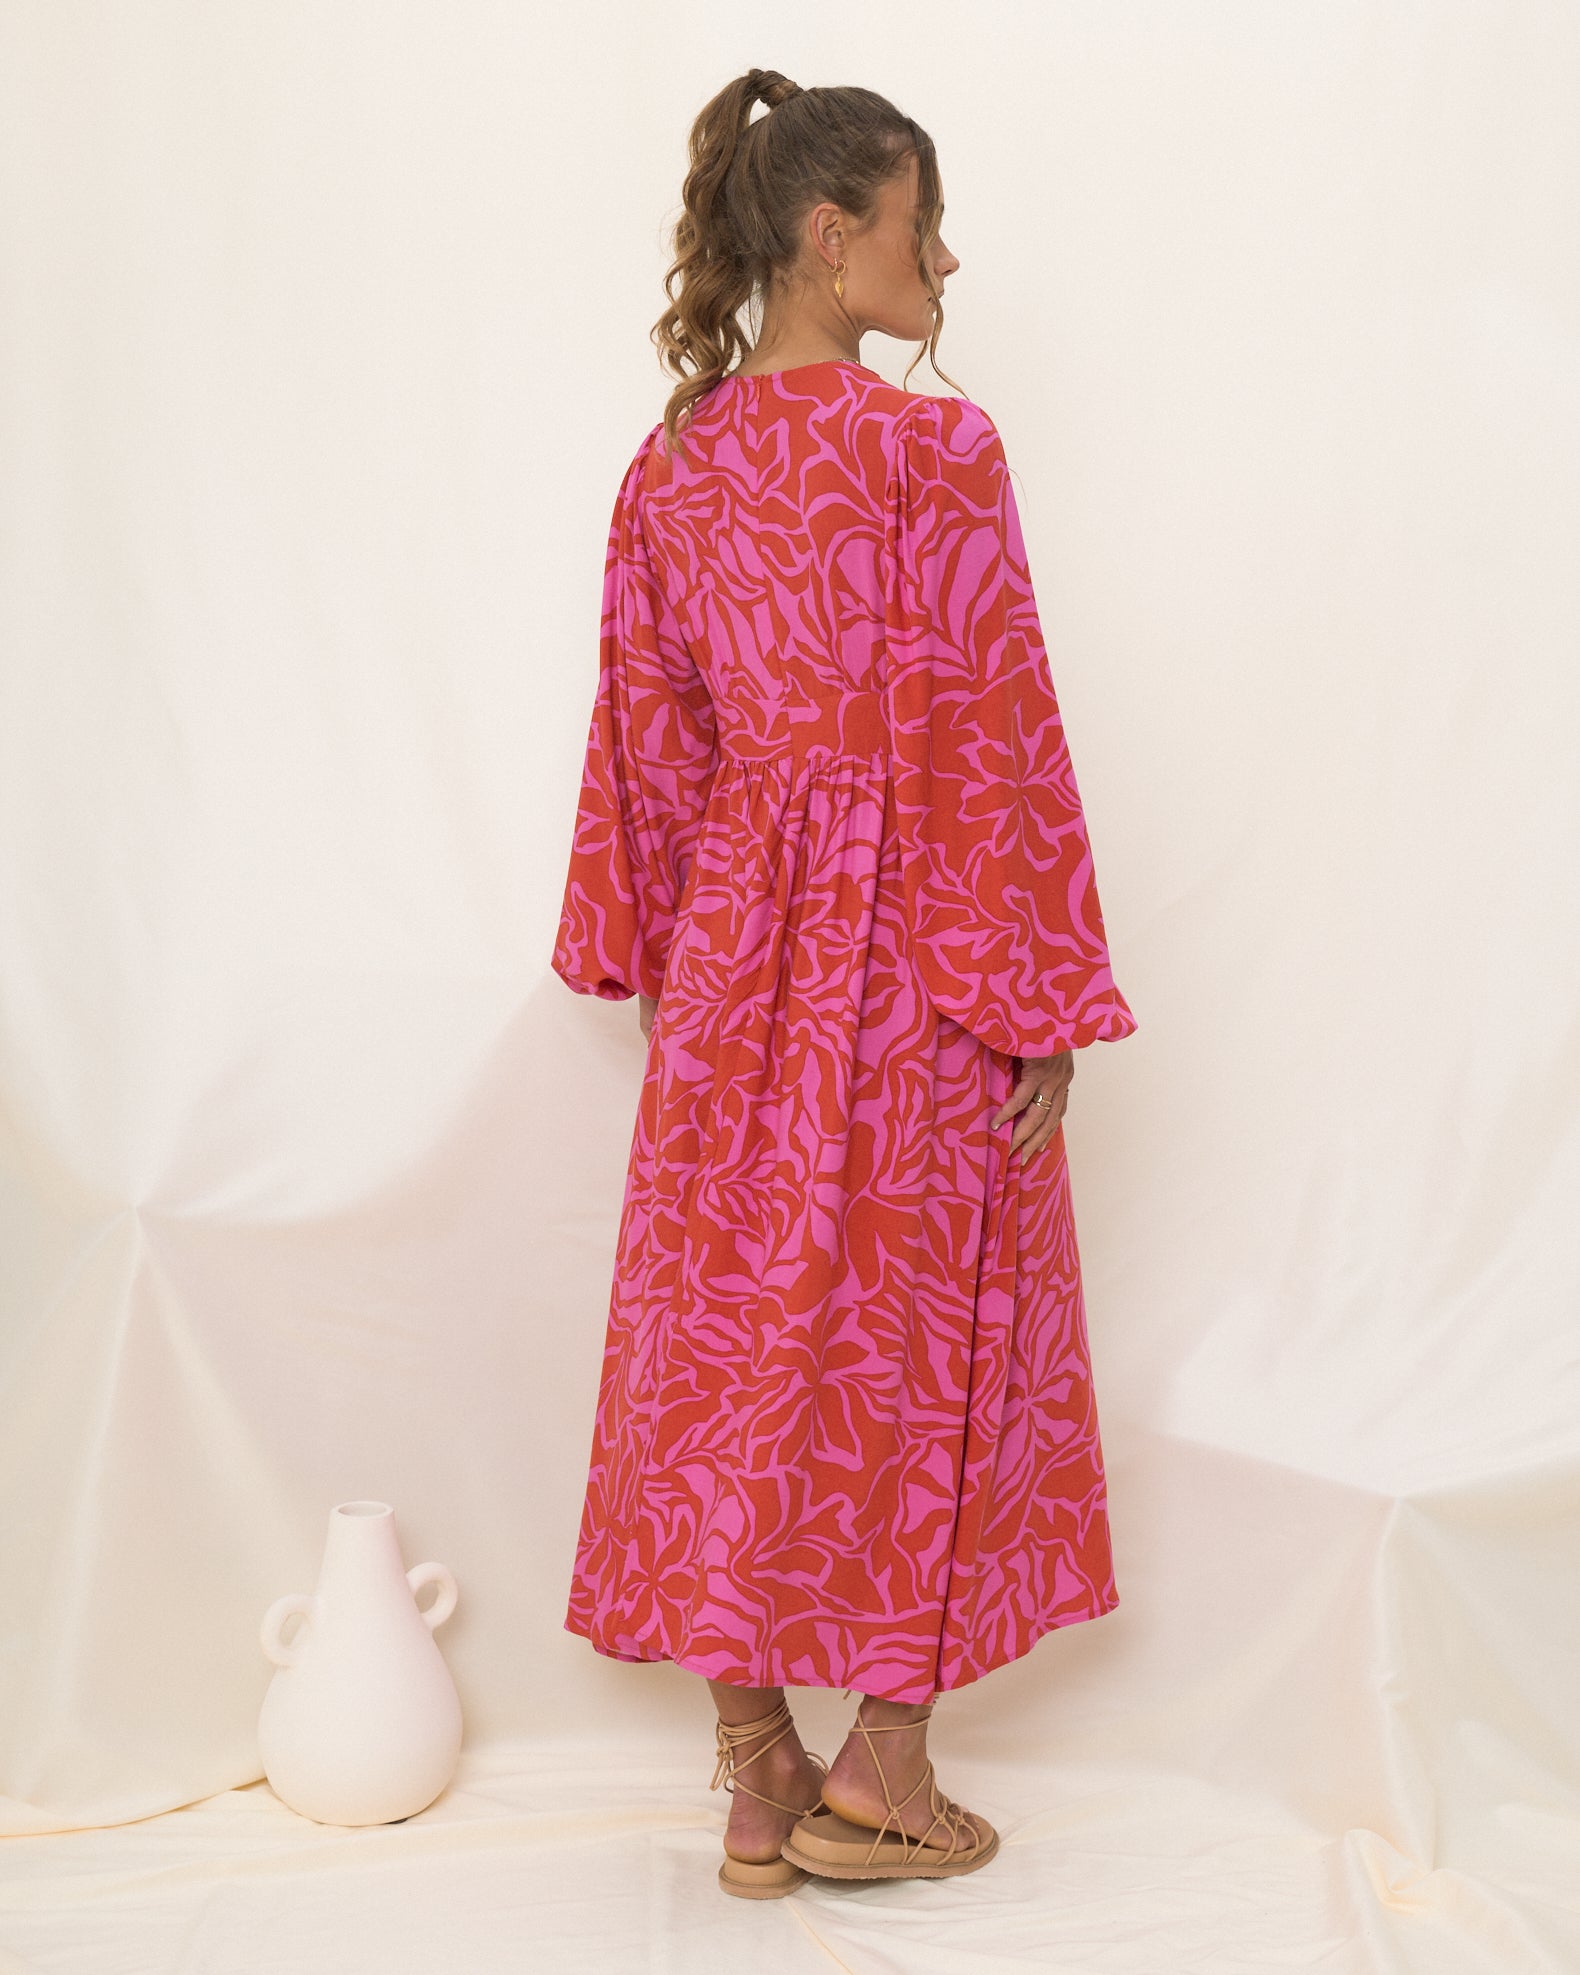 Kiana Hot Pink and Red Floral Midi Dress